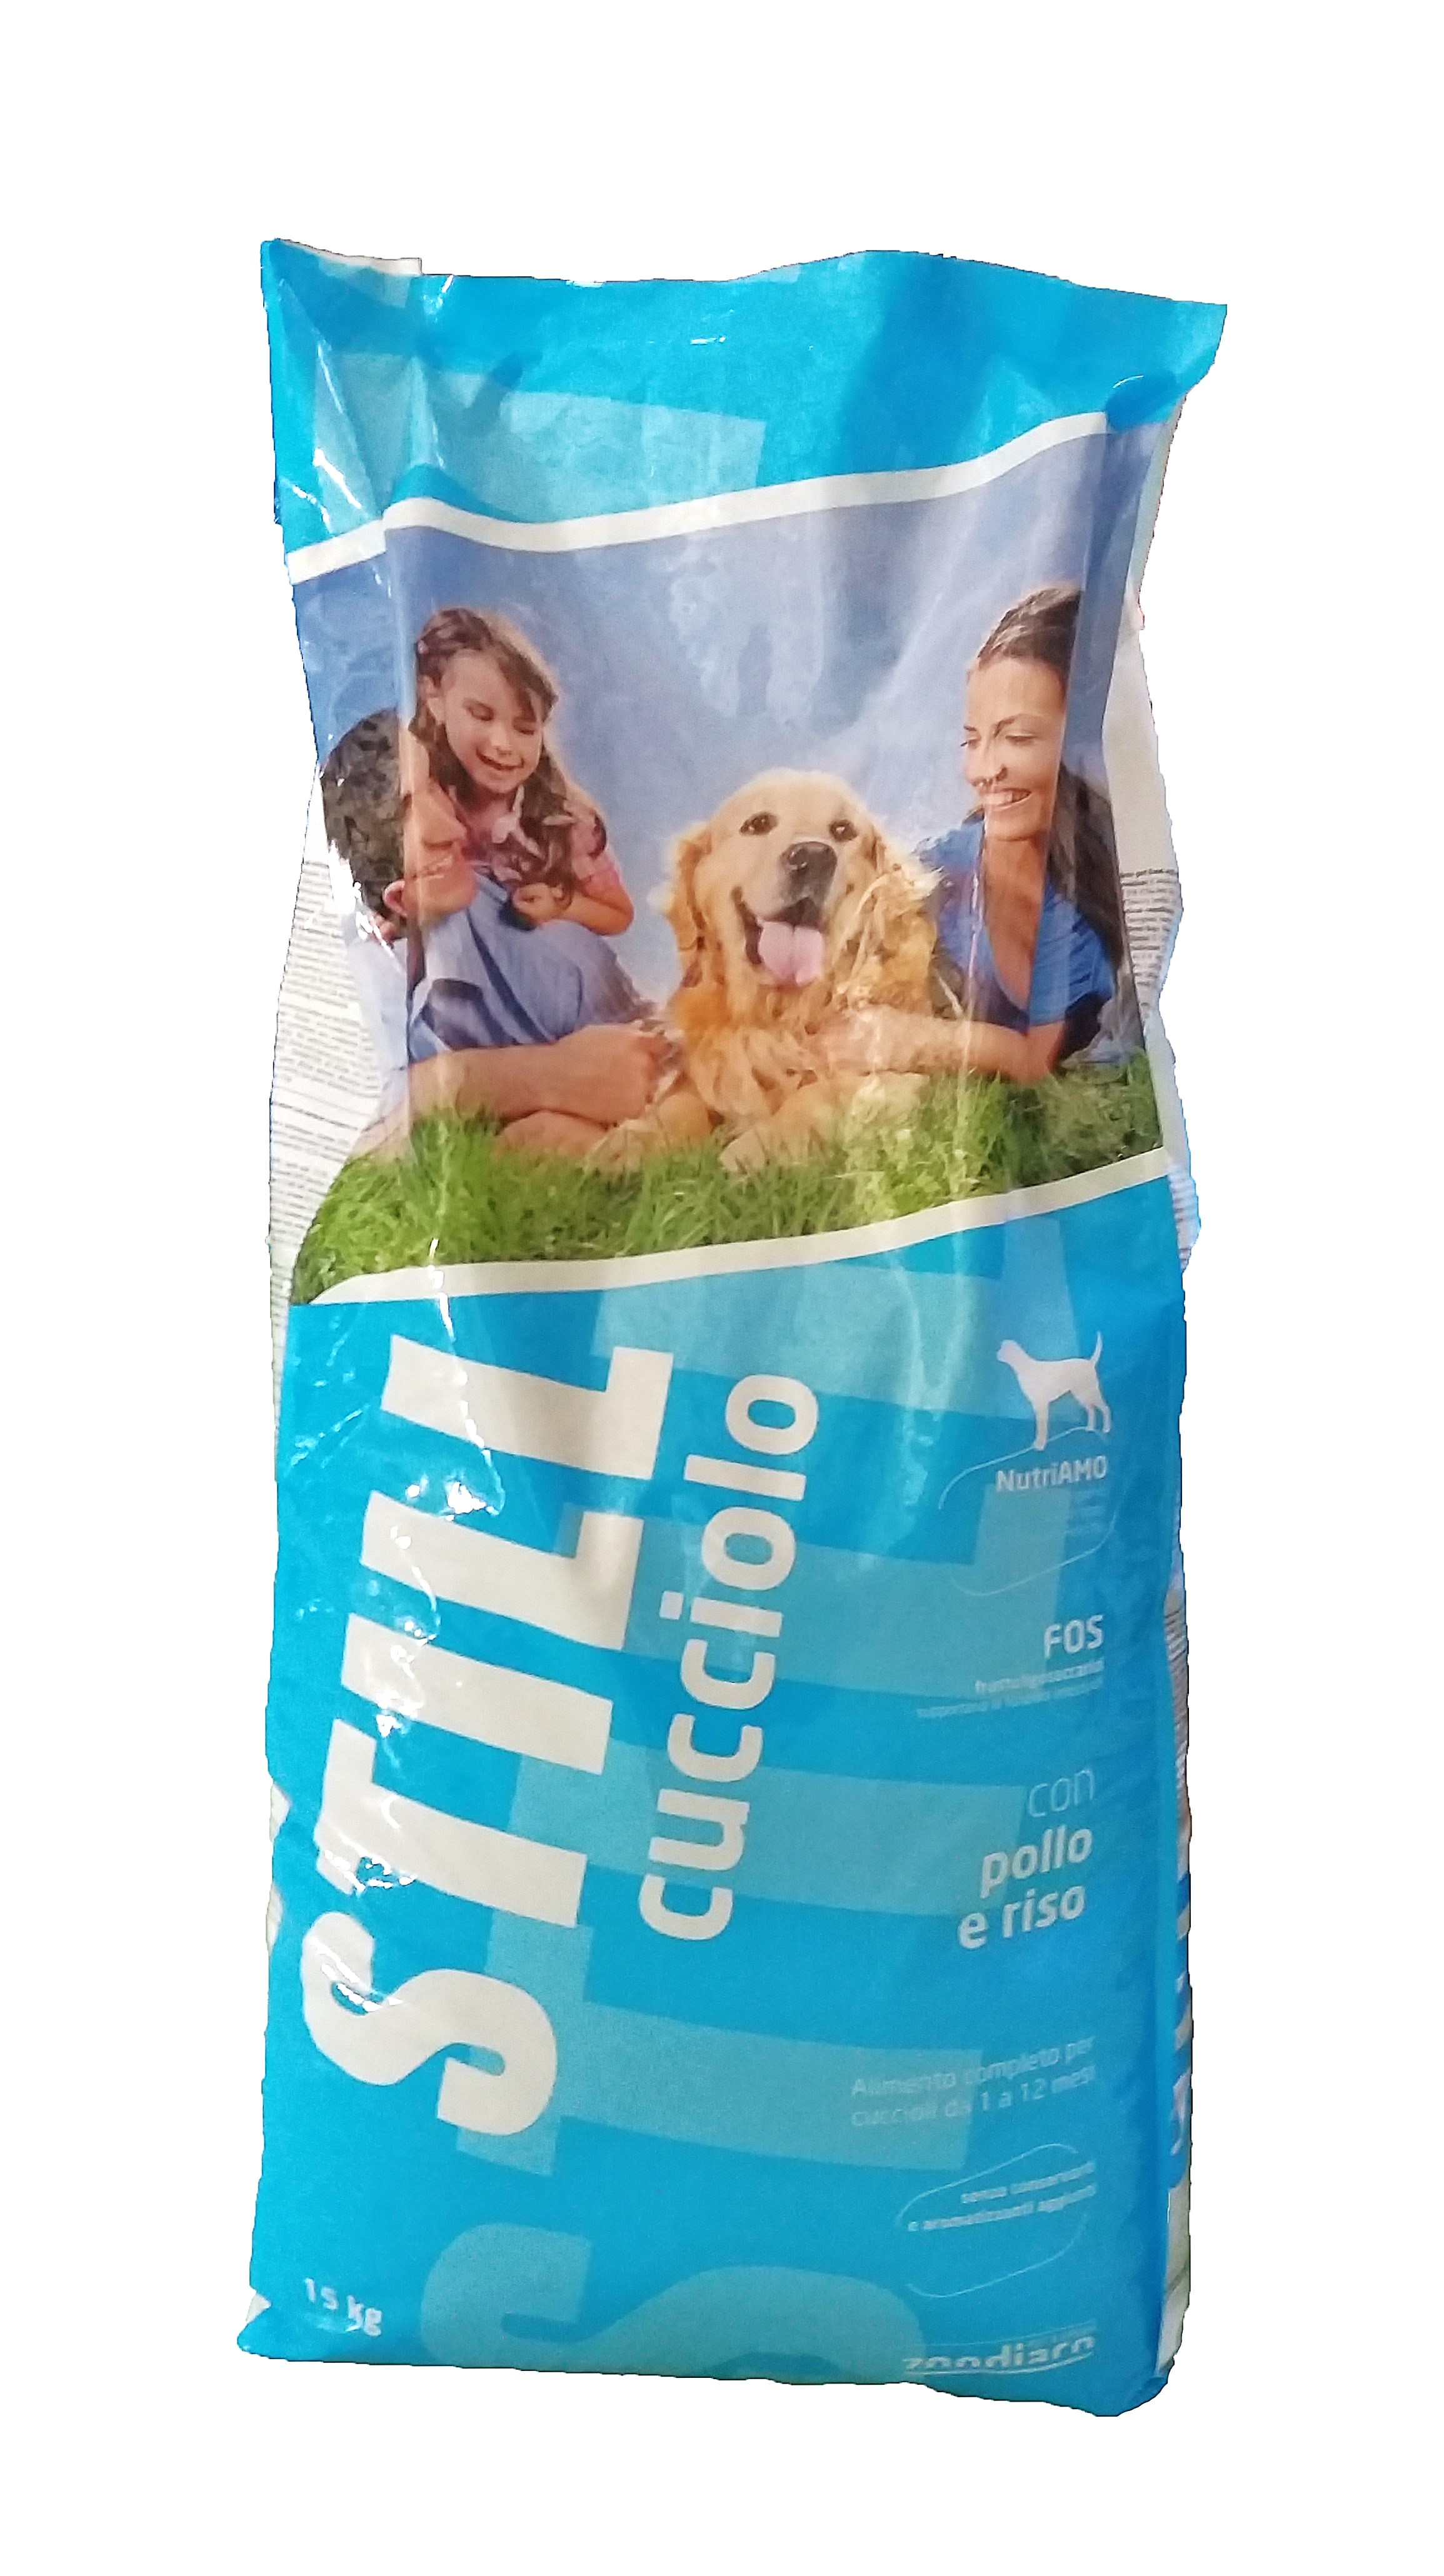 Still Dog Cucciolo (Puppy) 15 Kg, High Premium (Made in Italy)